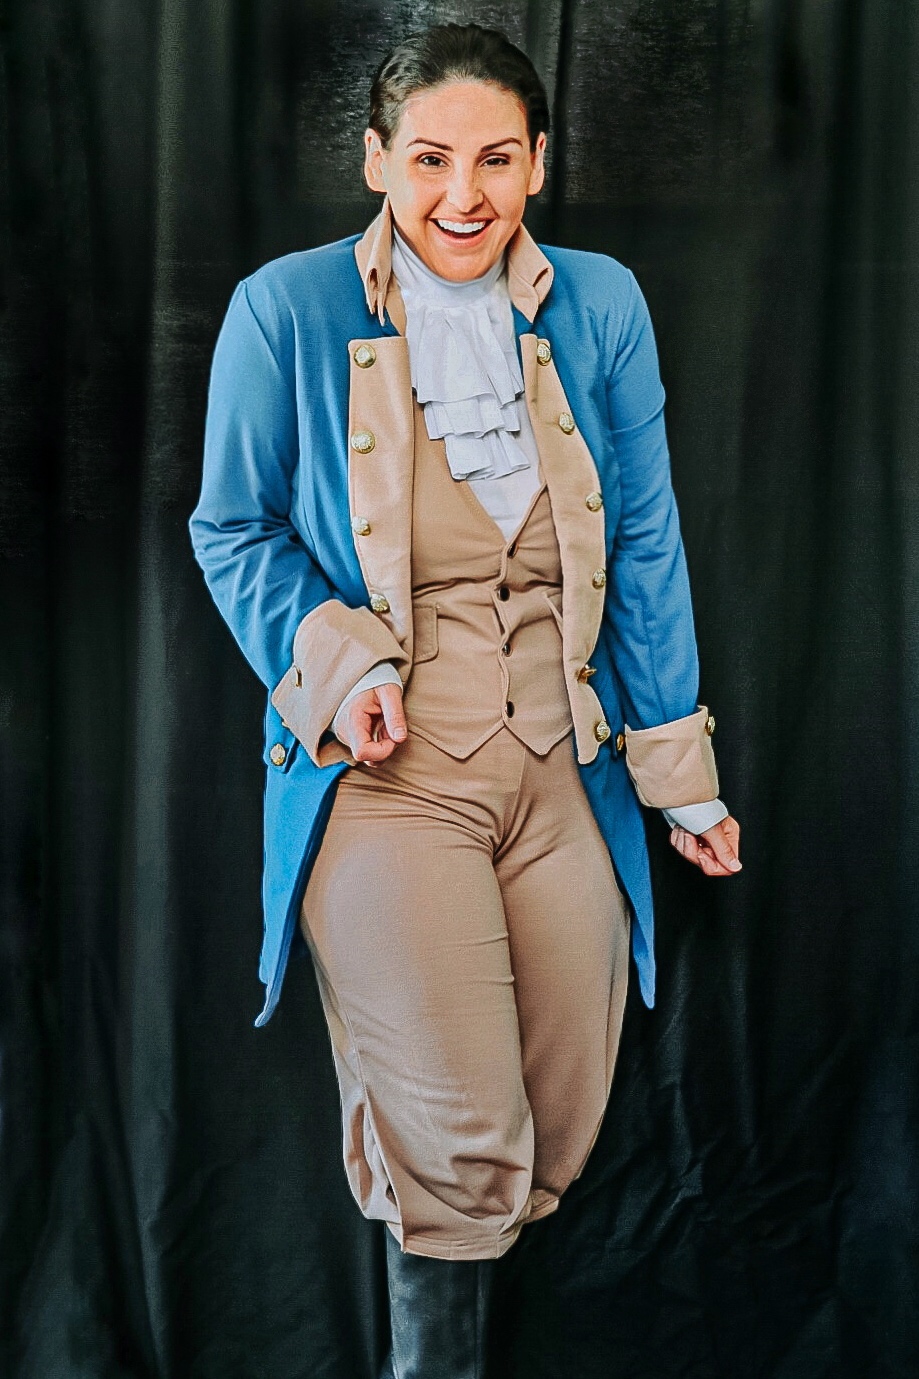 Women's Alexander Hamilton costume for Halloween